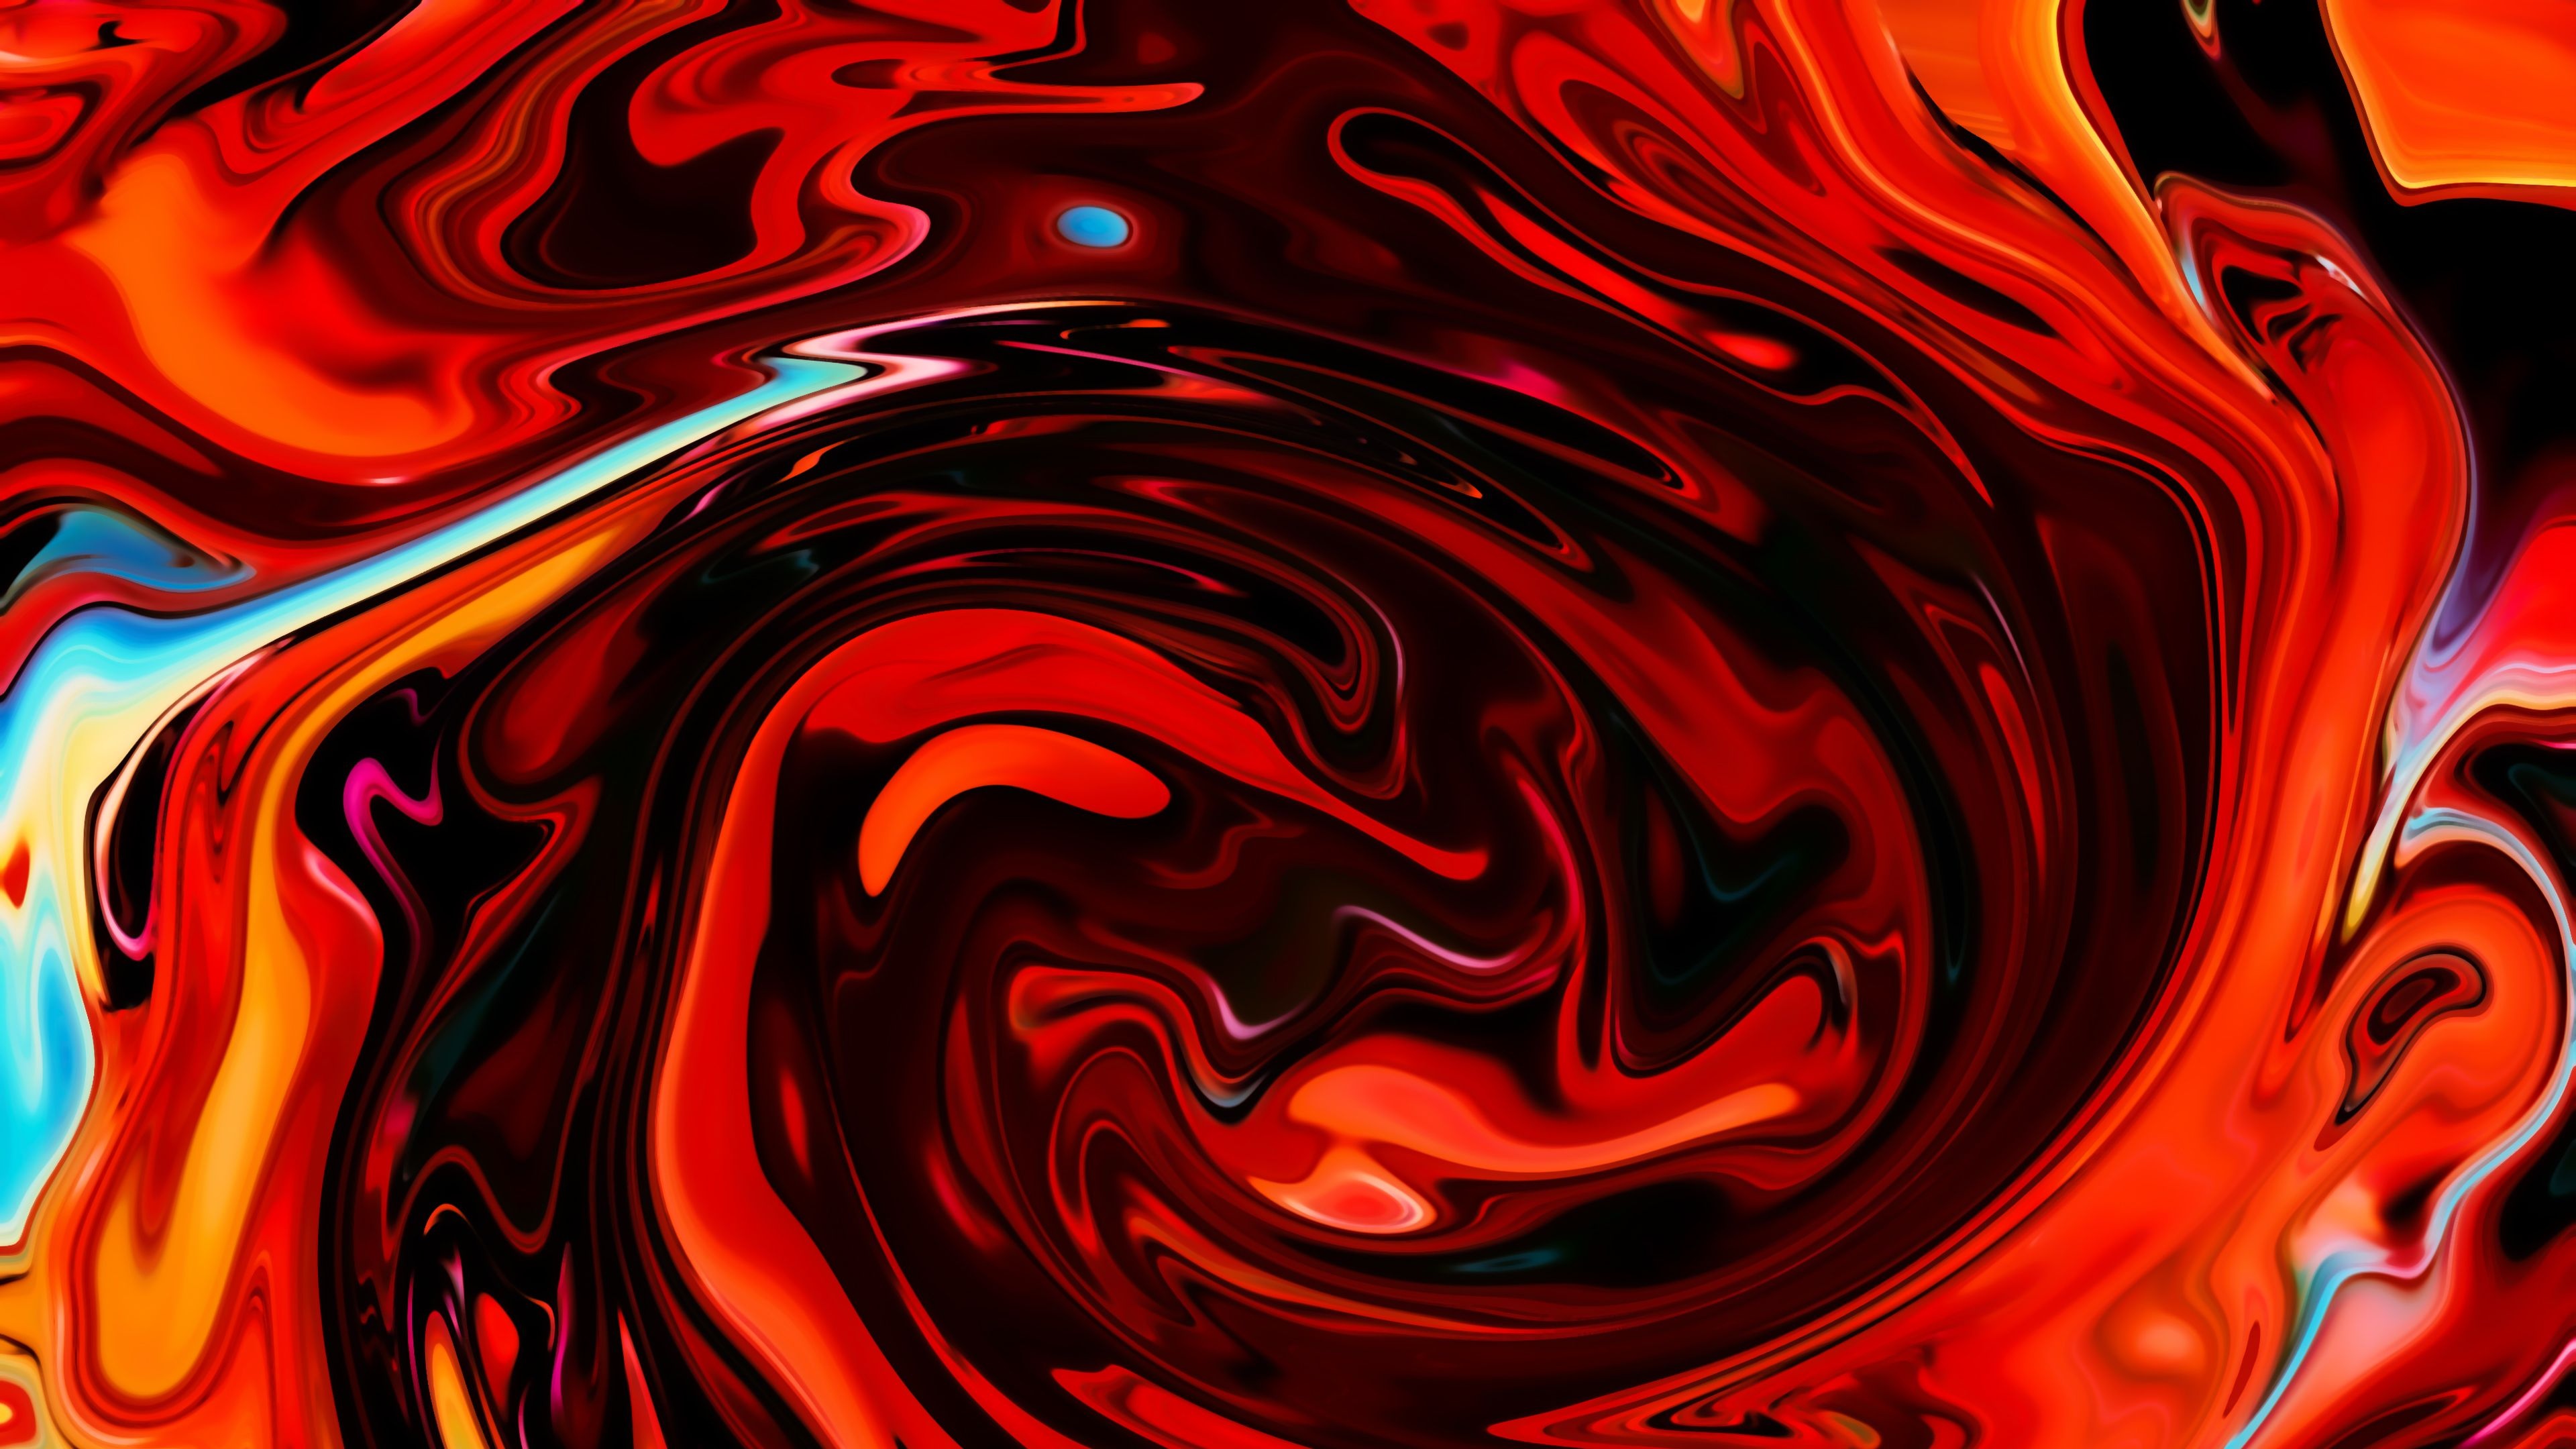 Swirl, Red swirl wallpapers, Top free backgrounds, 3840x2160 4K Desktop